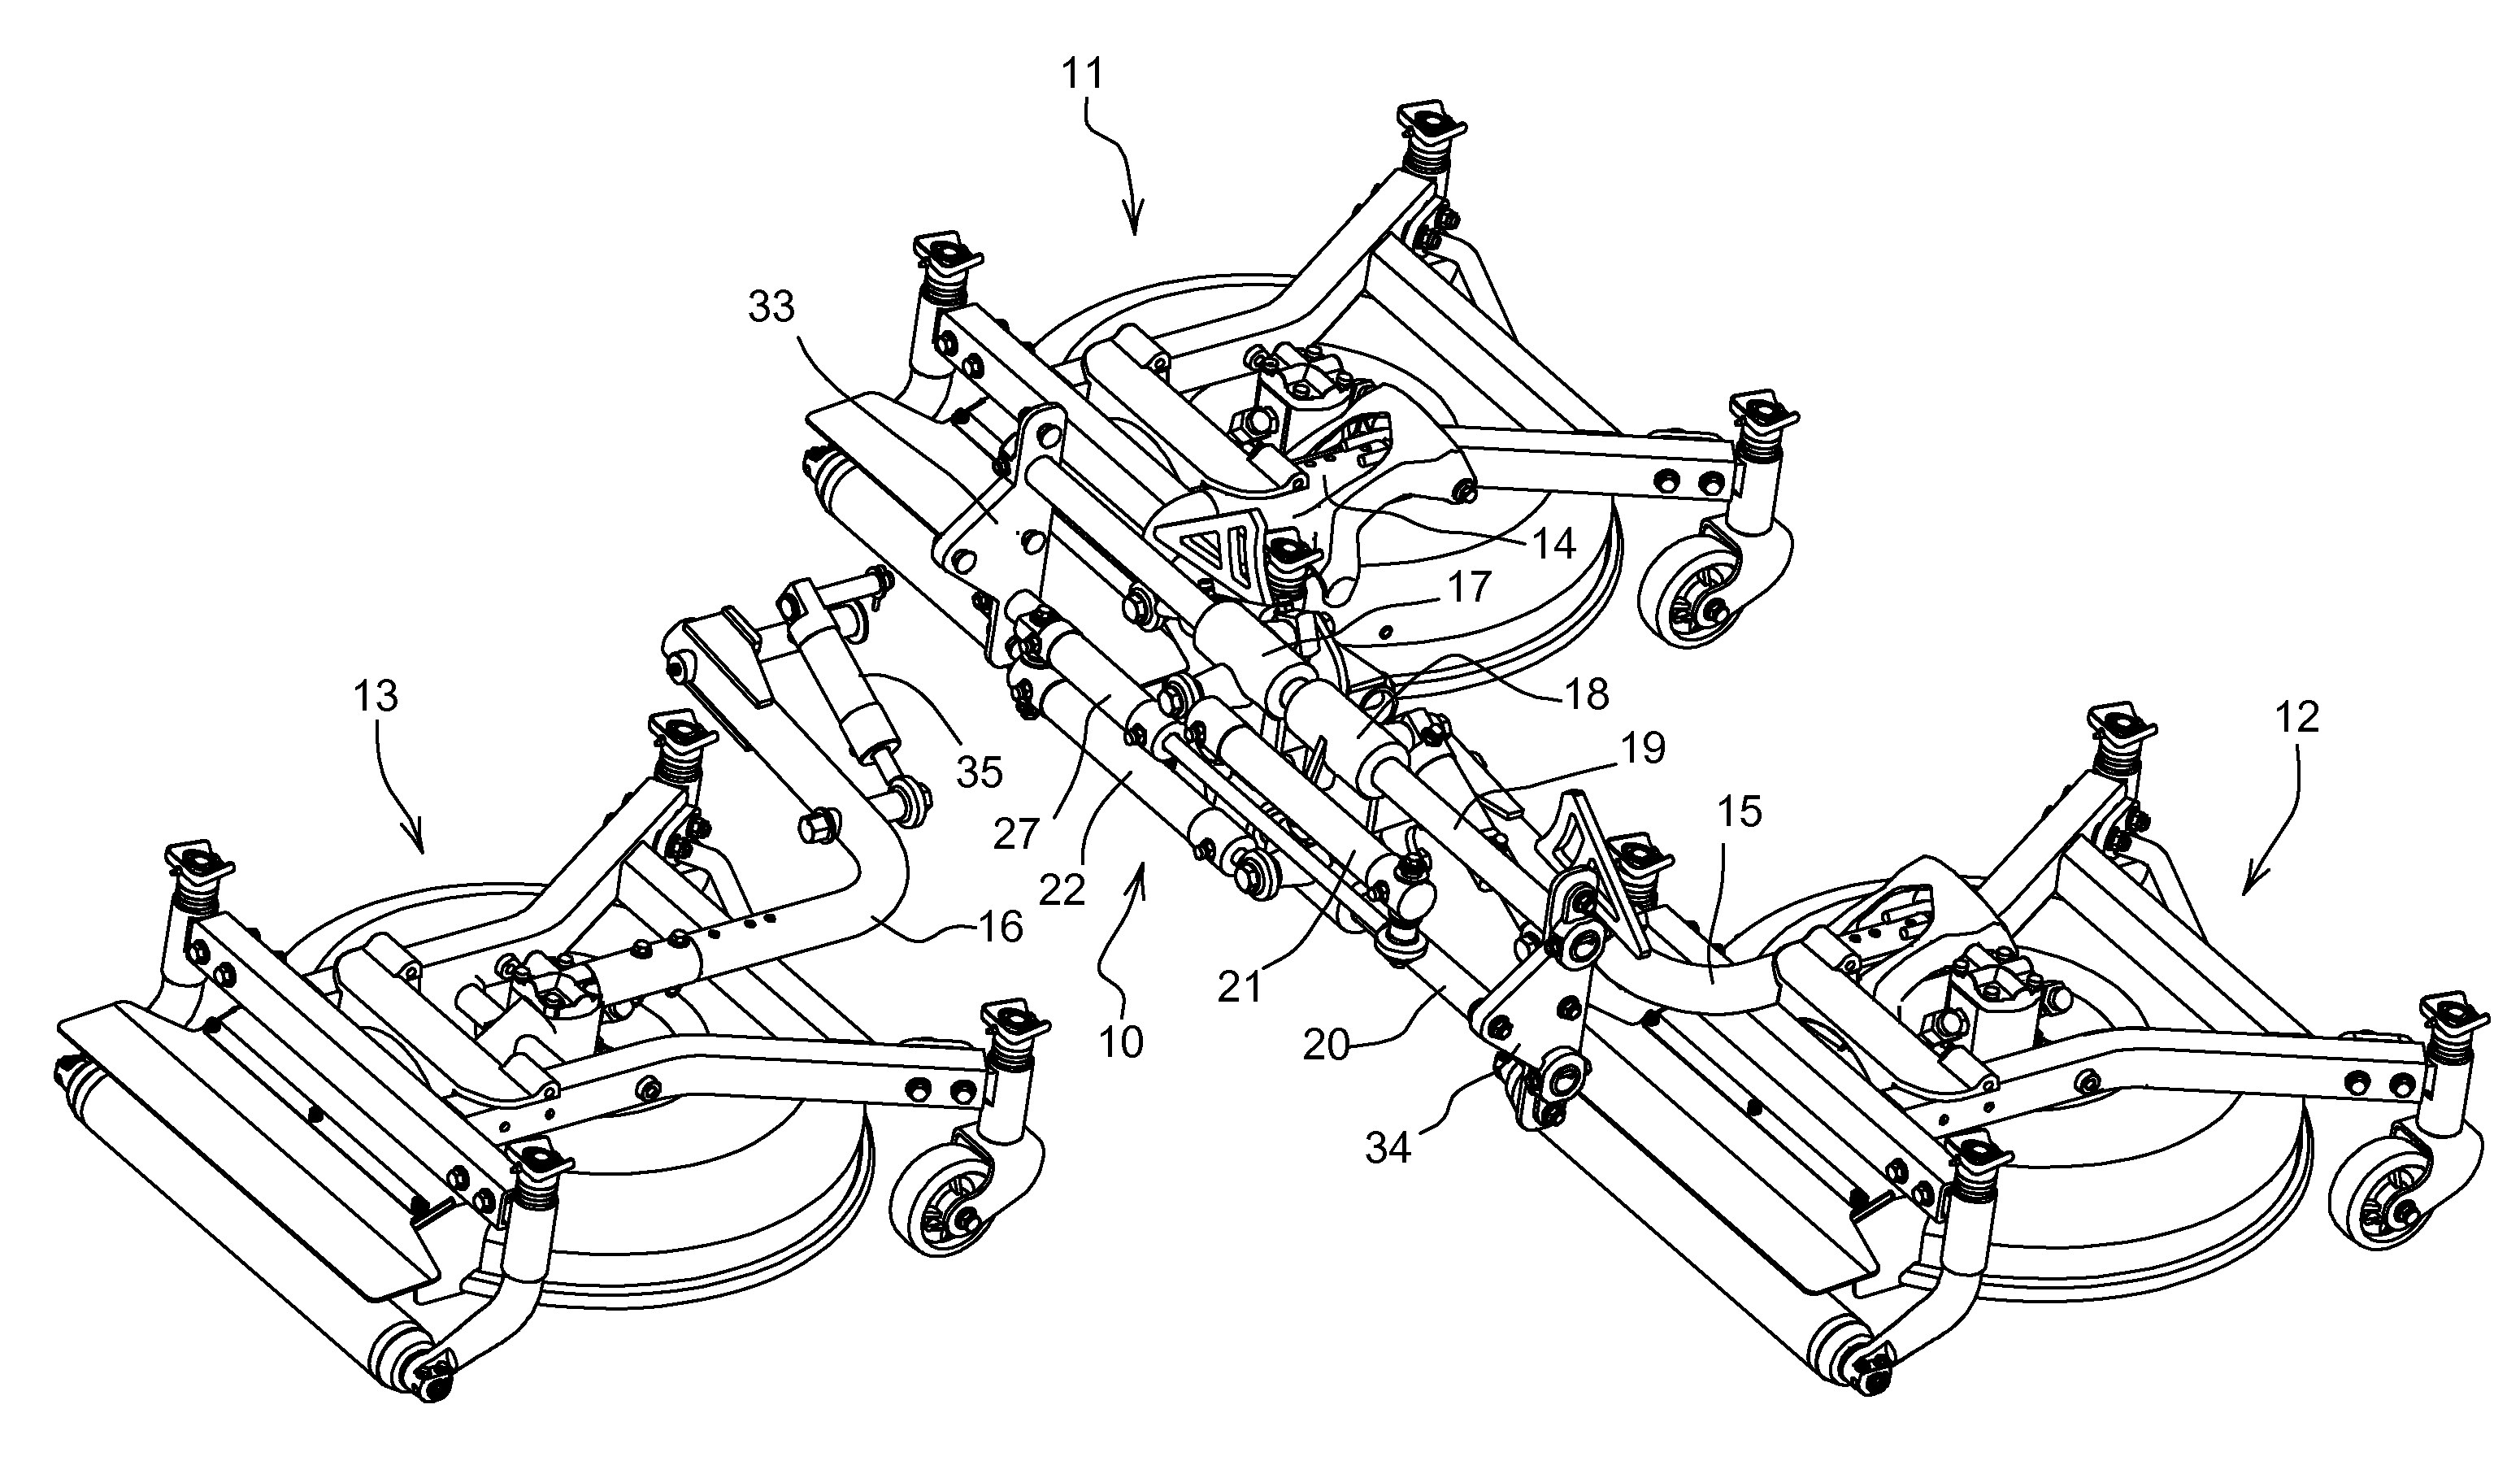 Shift mechanism for trim mower cutting units